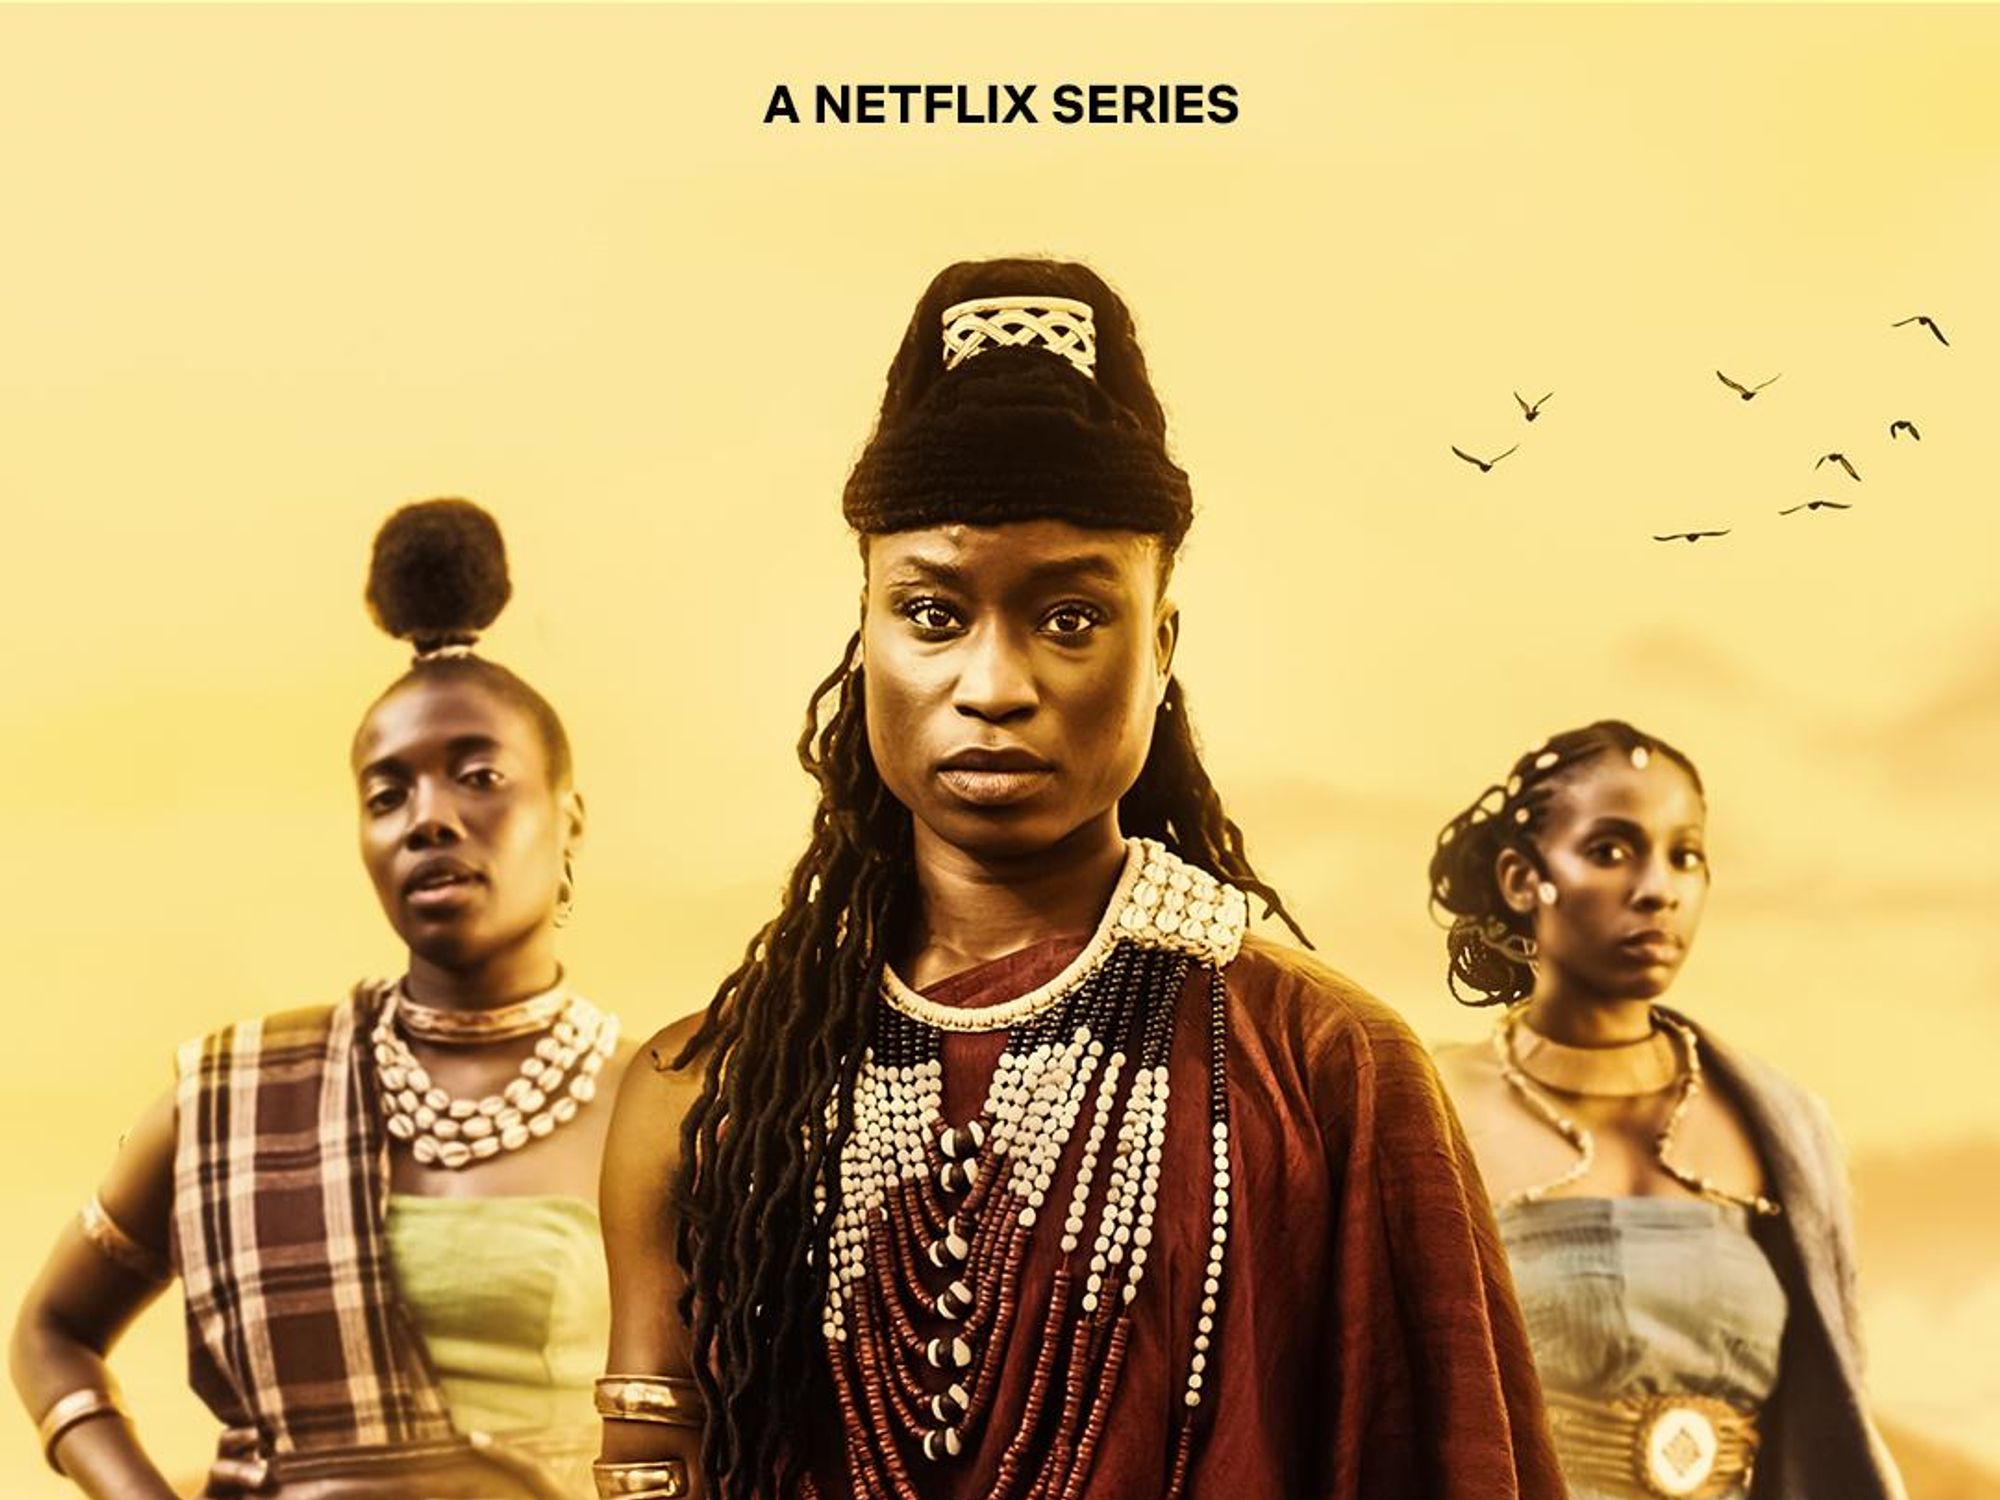 Netflix Announces New Documentary Series 'African Queens'